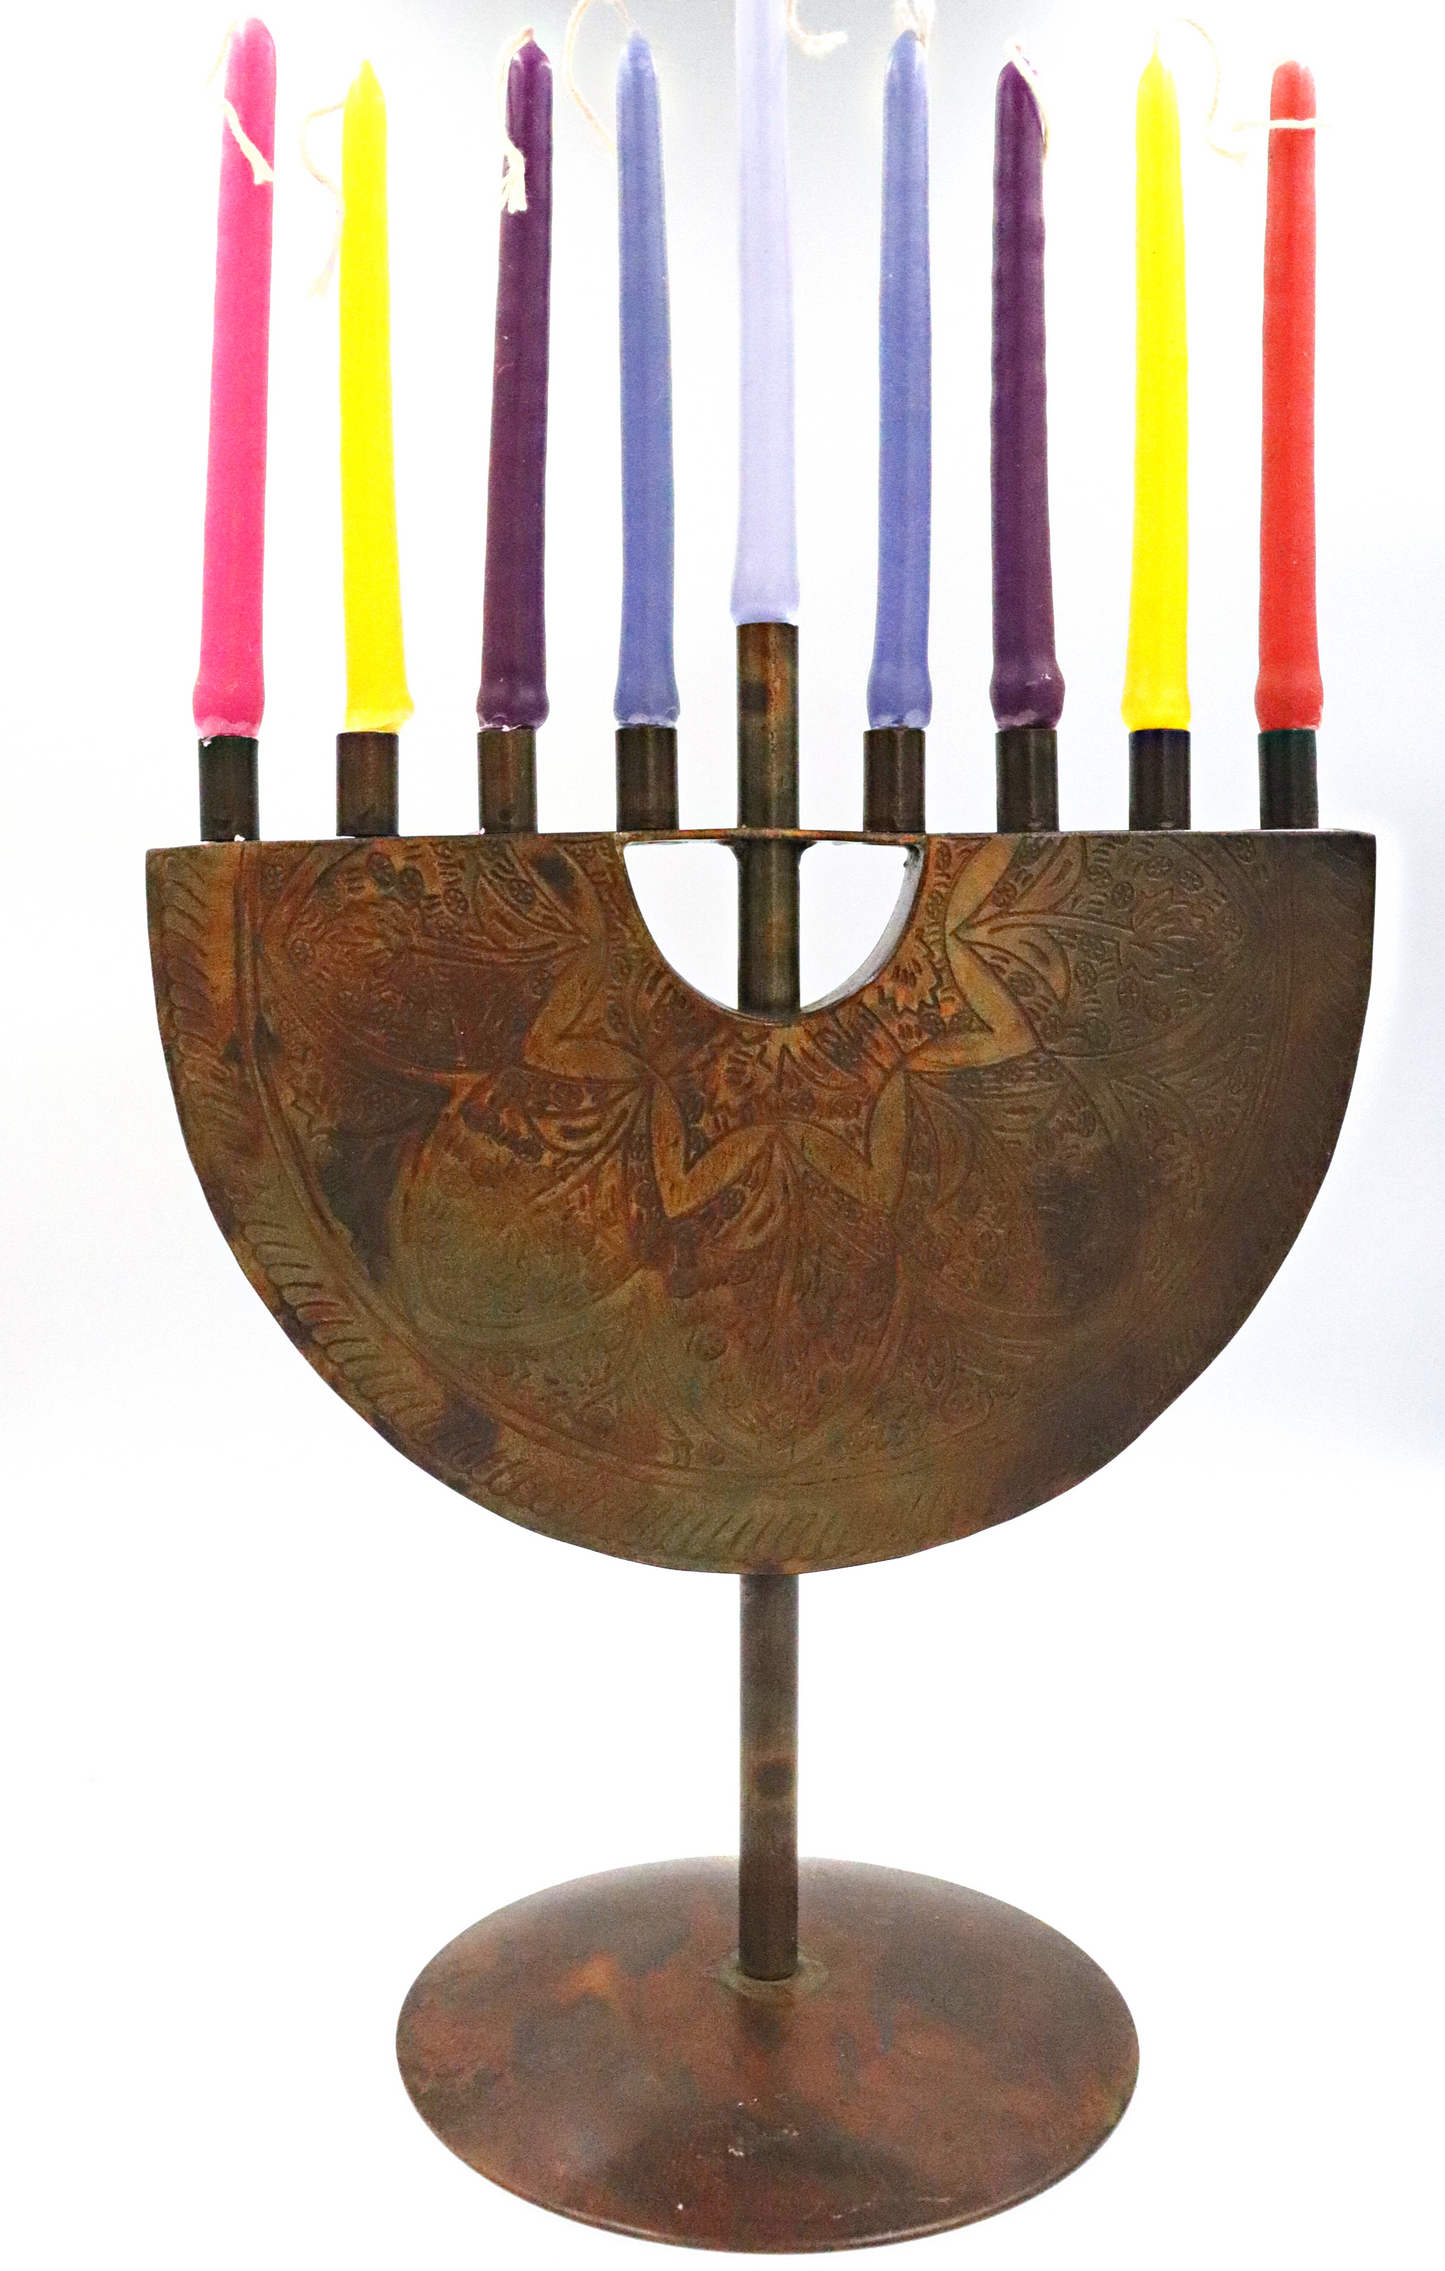 9 Candle Antiqued Iron Menorah Hanukkah Lamp Holder - Chanukah, Jewish, Judaica Home Decor